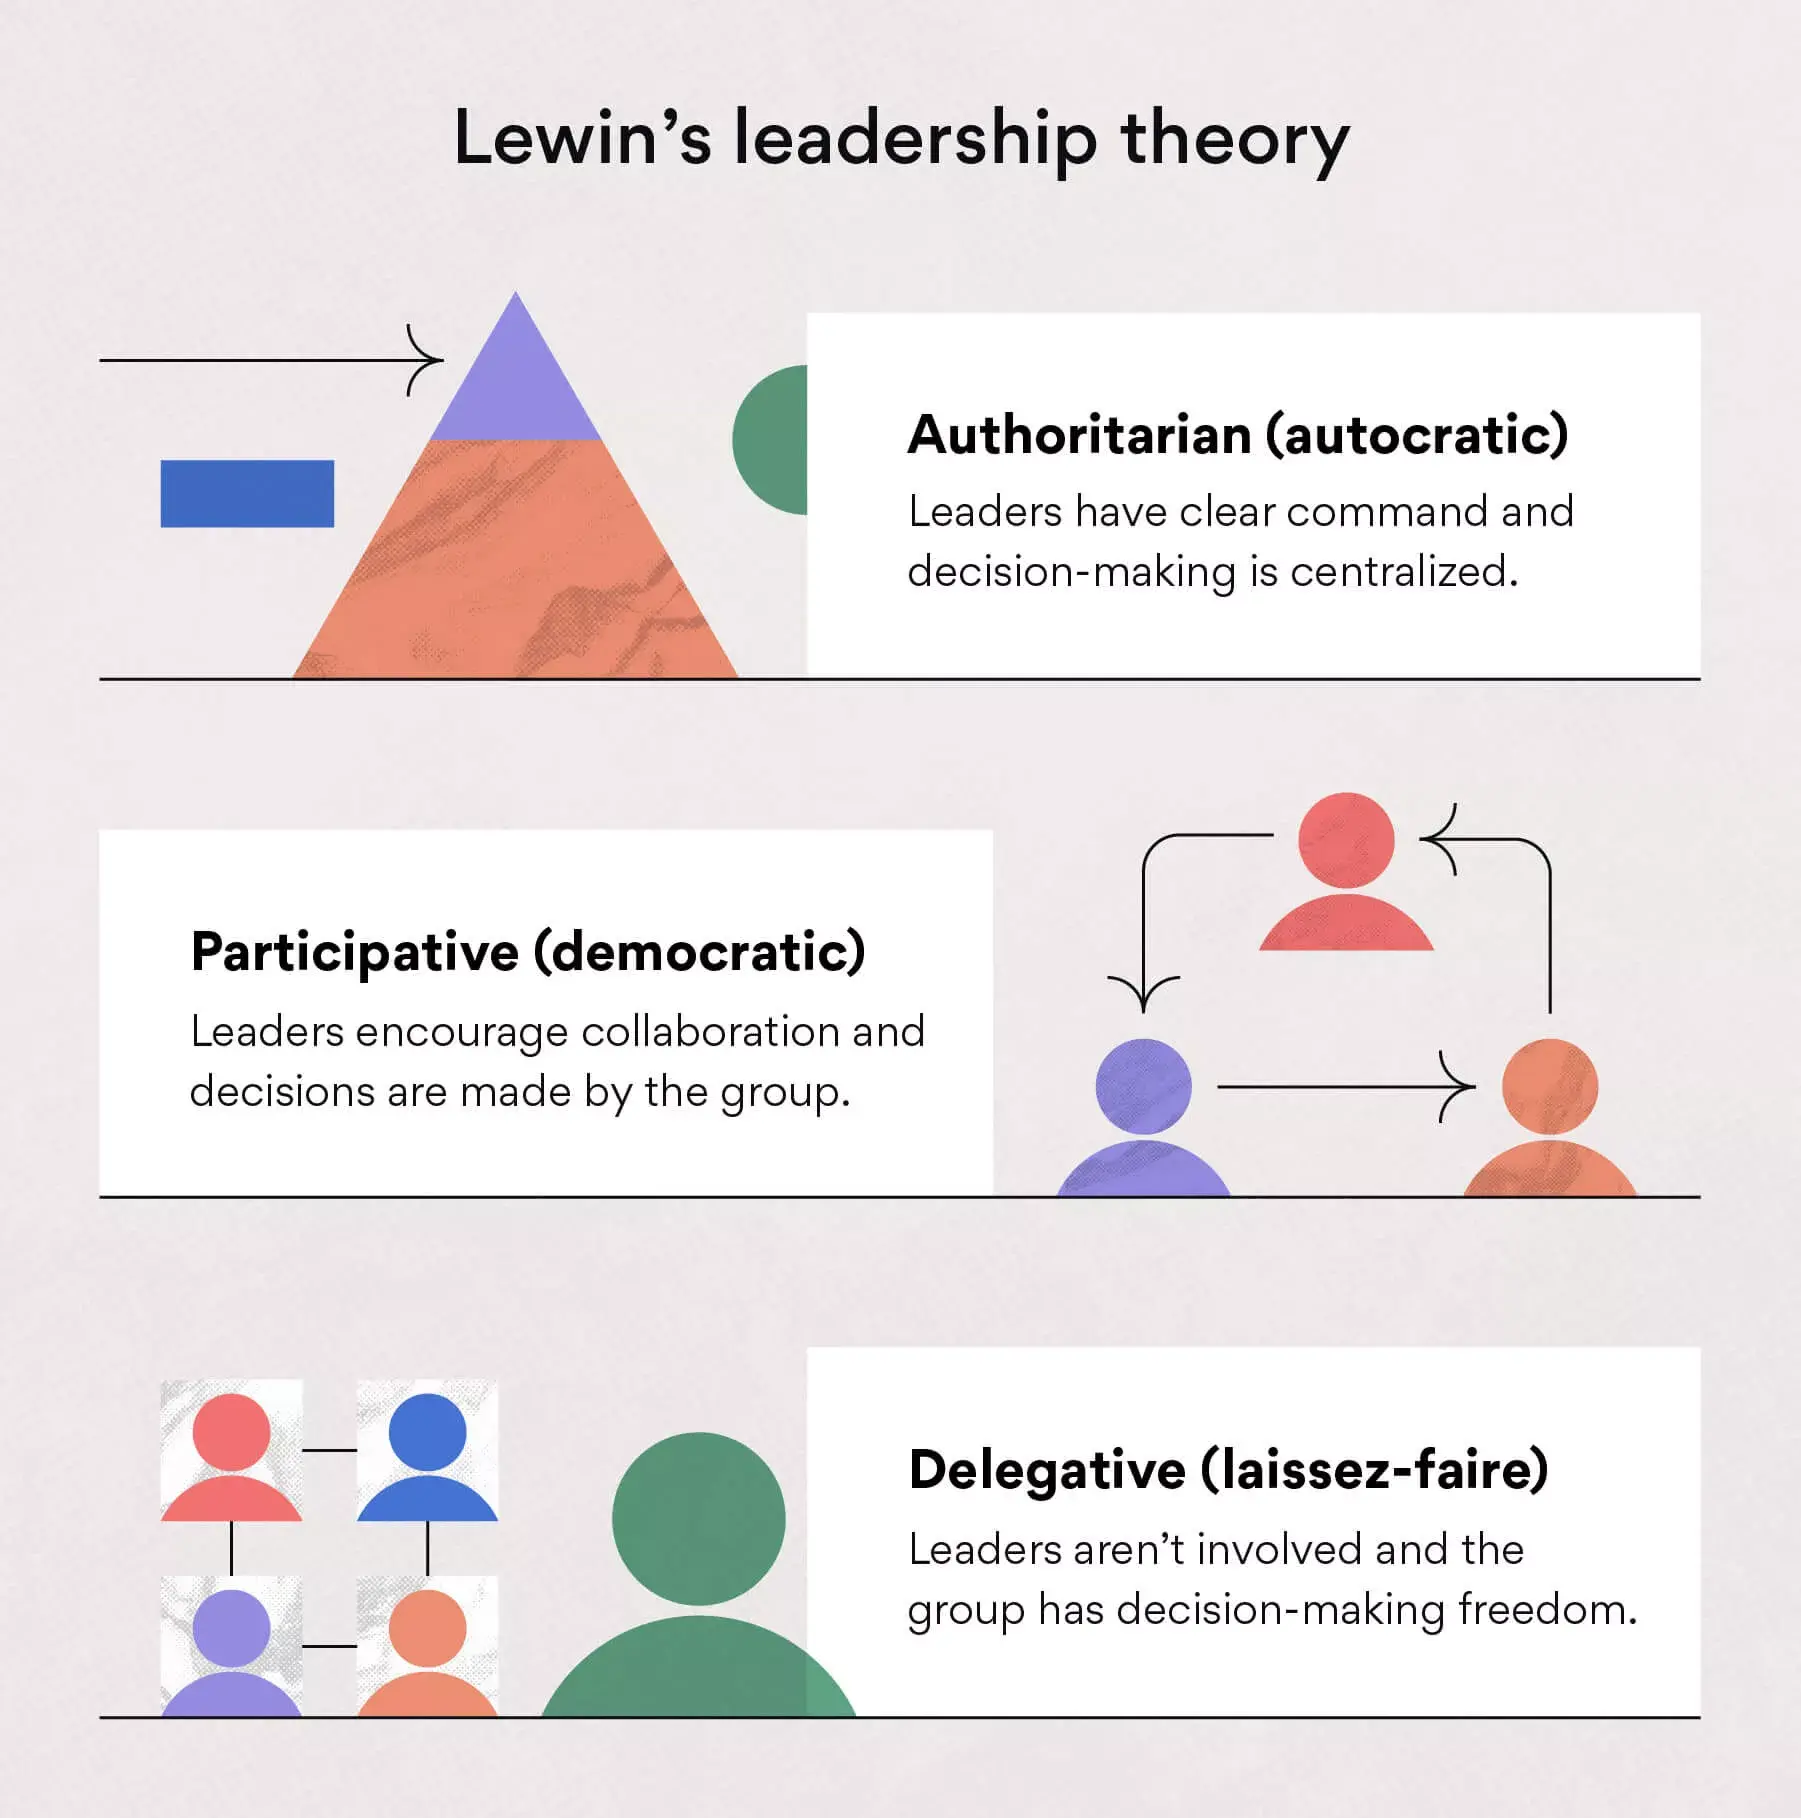 Lewin's leadership theory